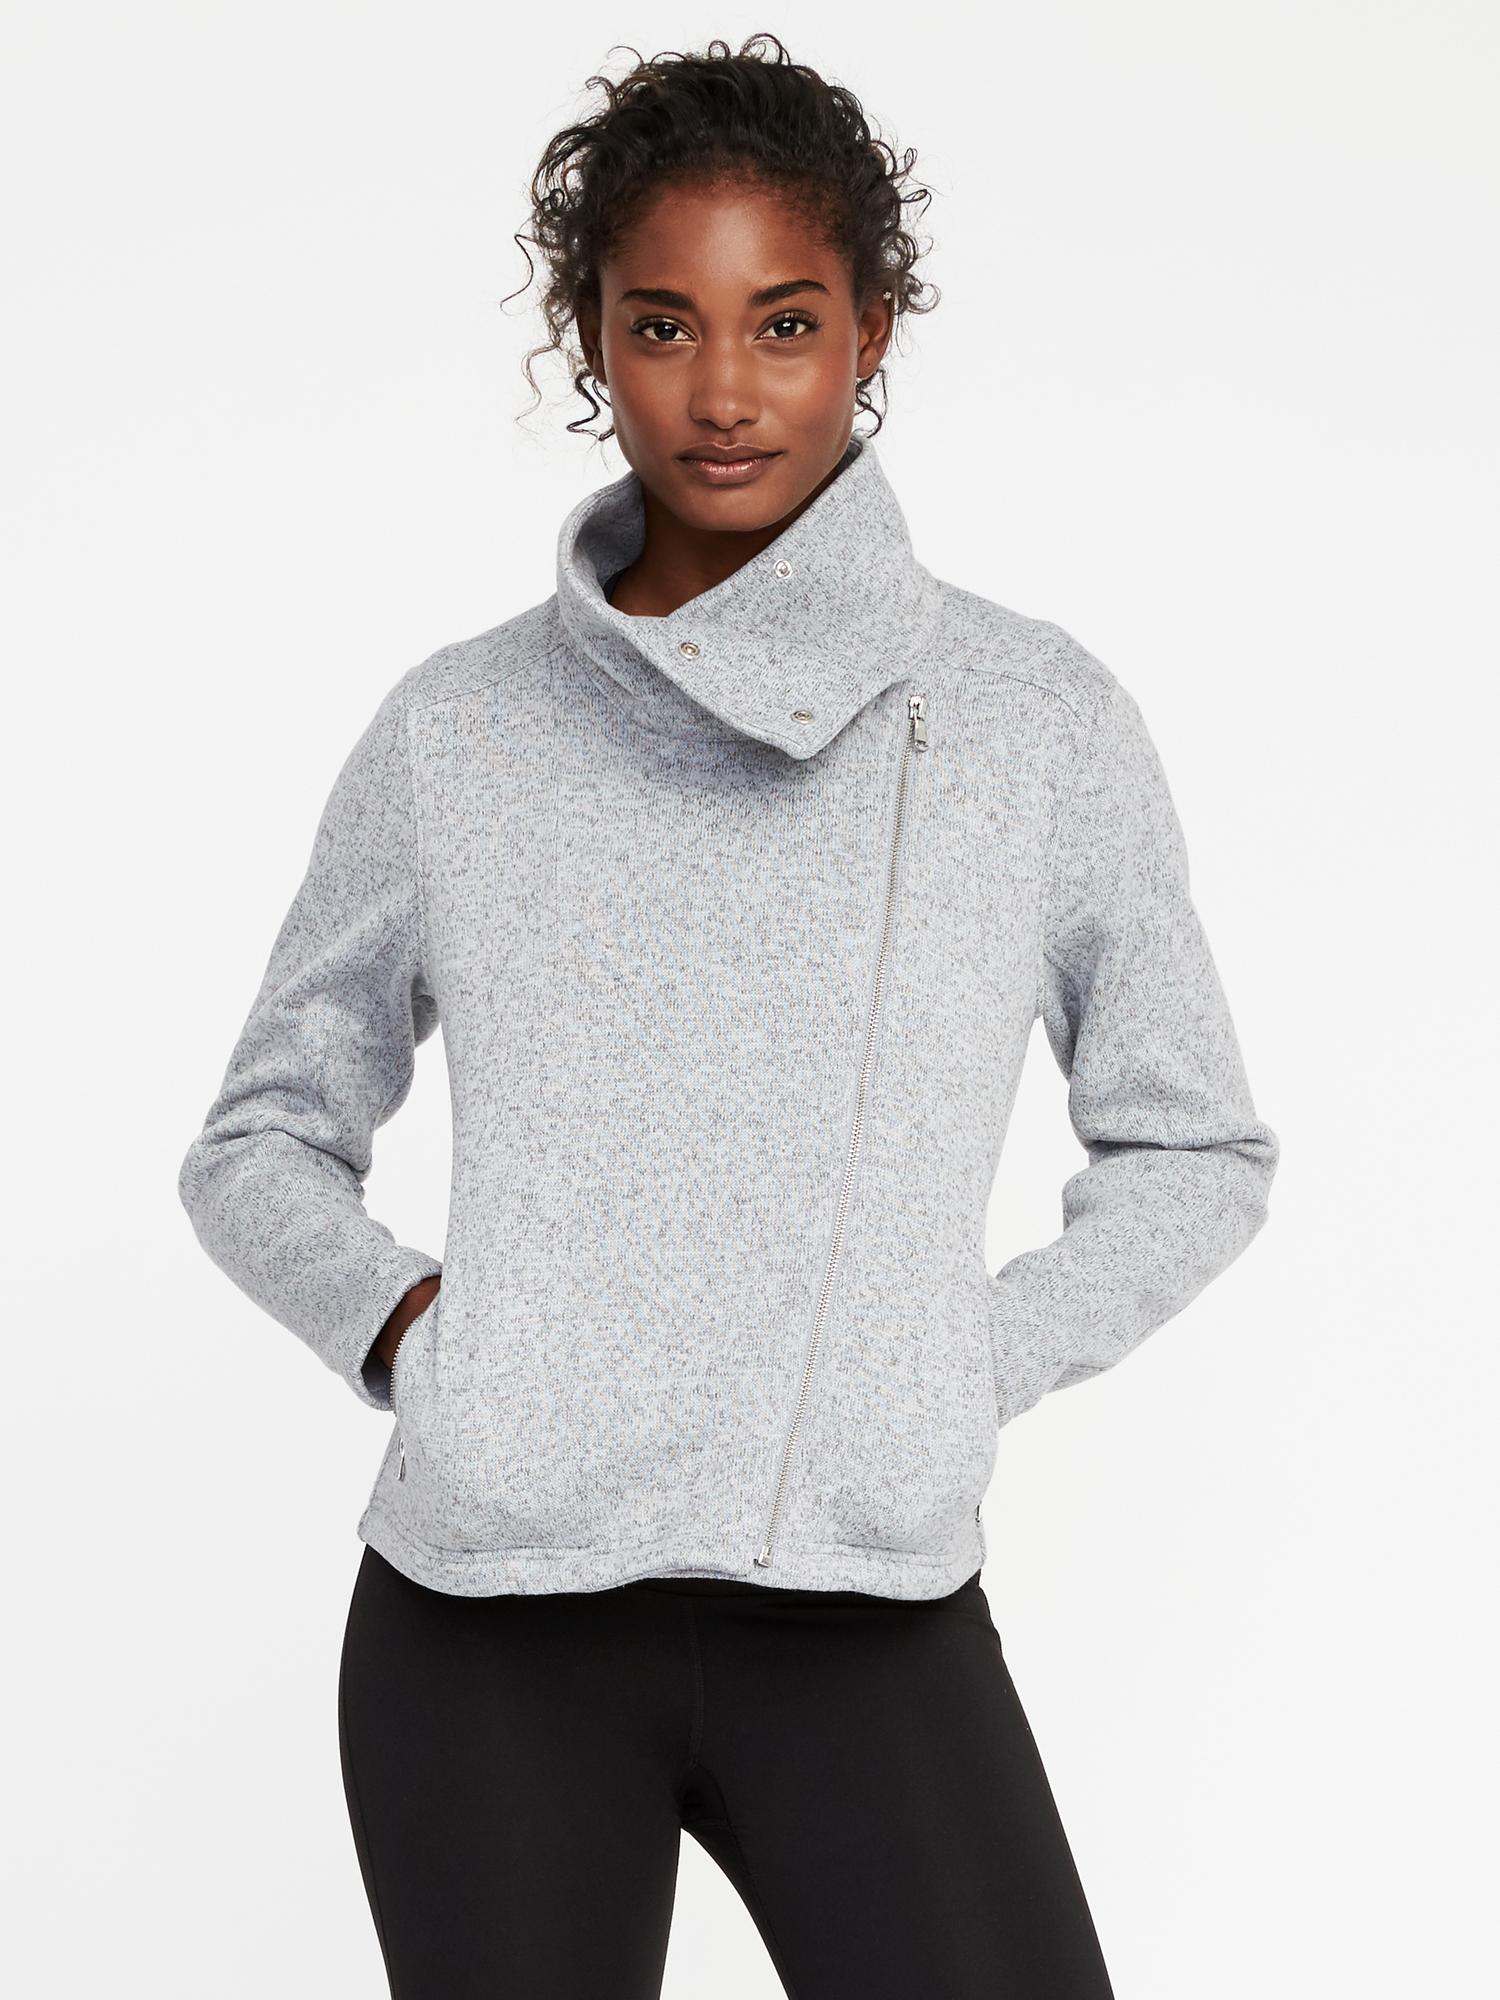 Go-Warm Sweater-Knit Moto Jacket for Women | Old Navy